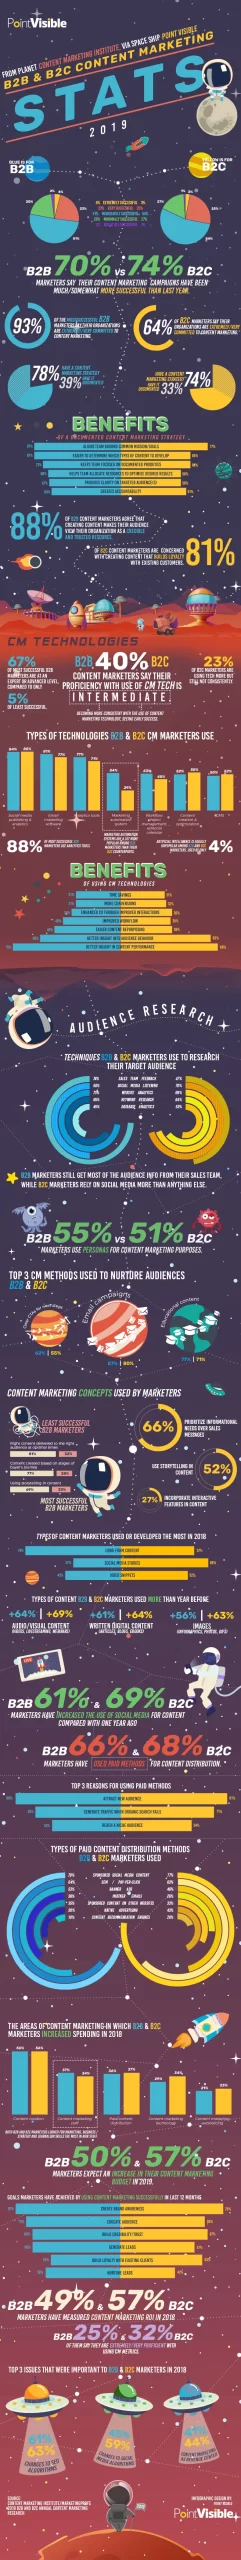 Content marketing statistics for 2019.